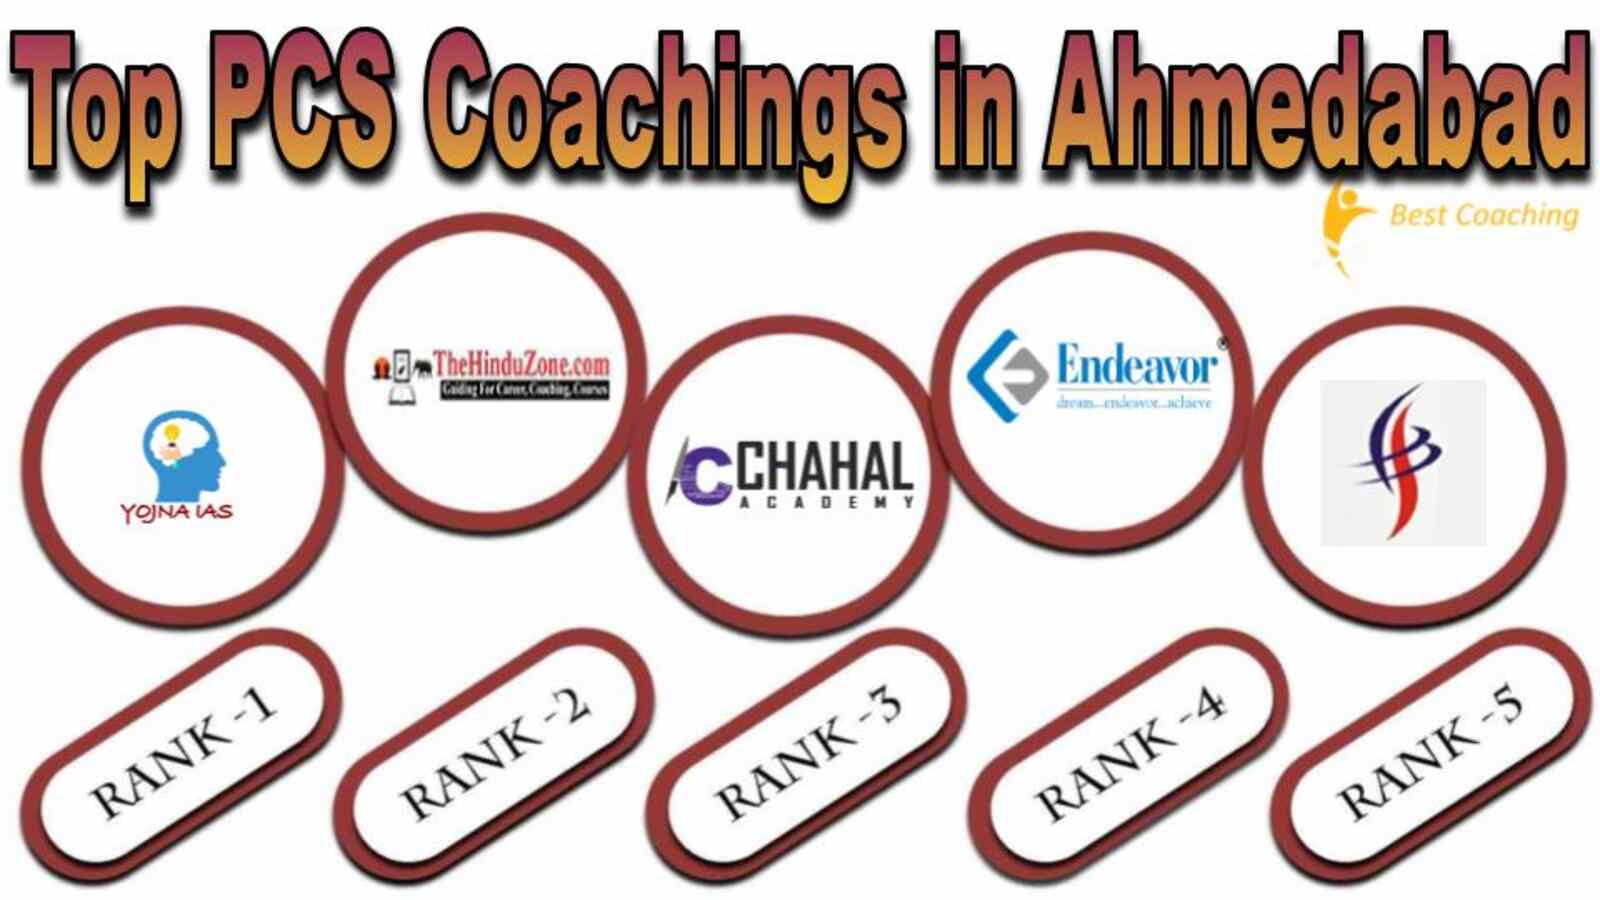 Top PCS Coachings in Ahmedabad